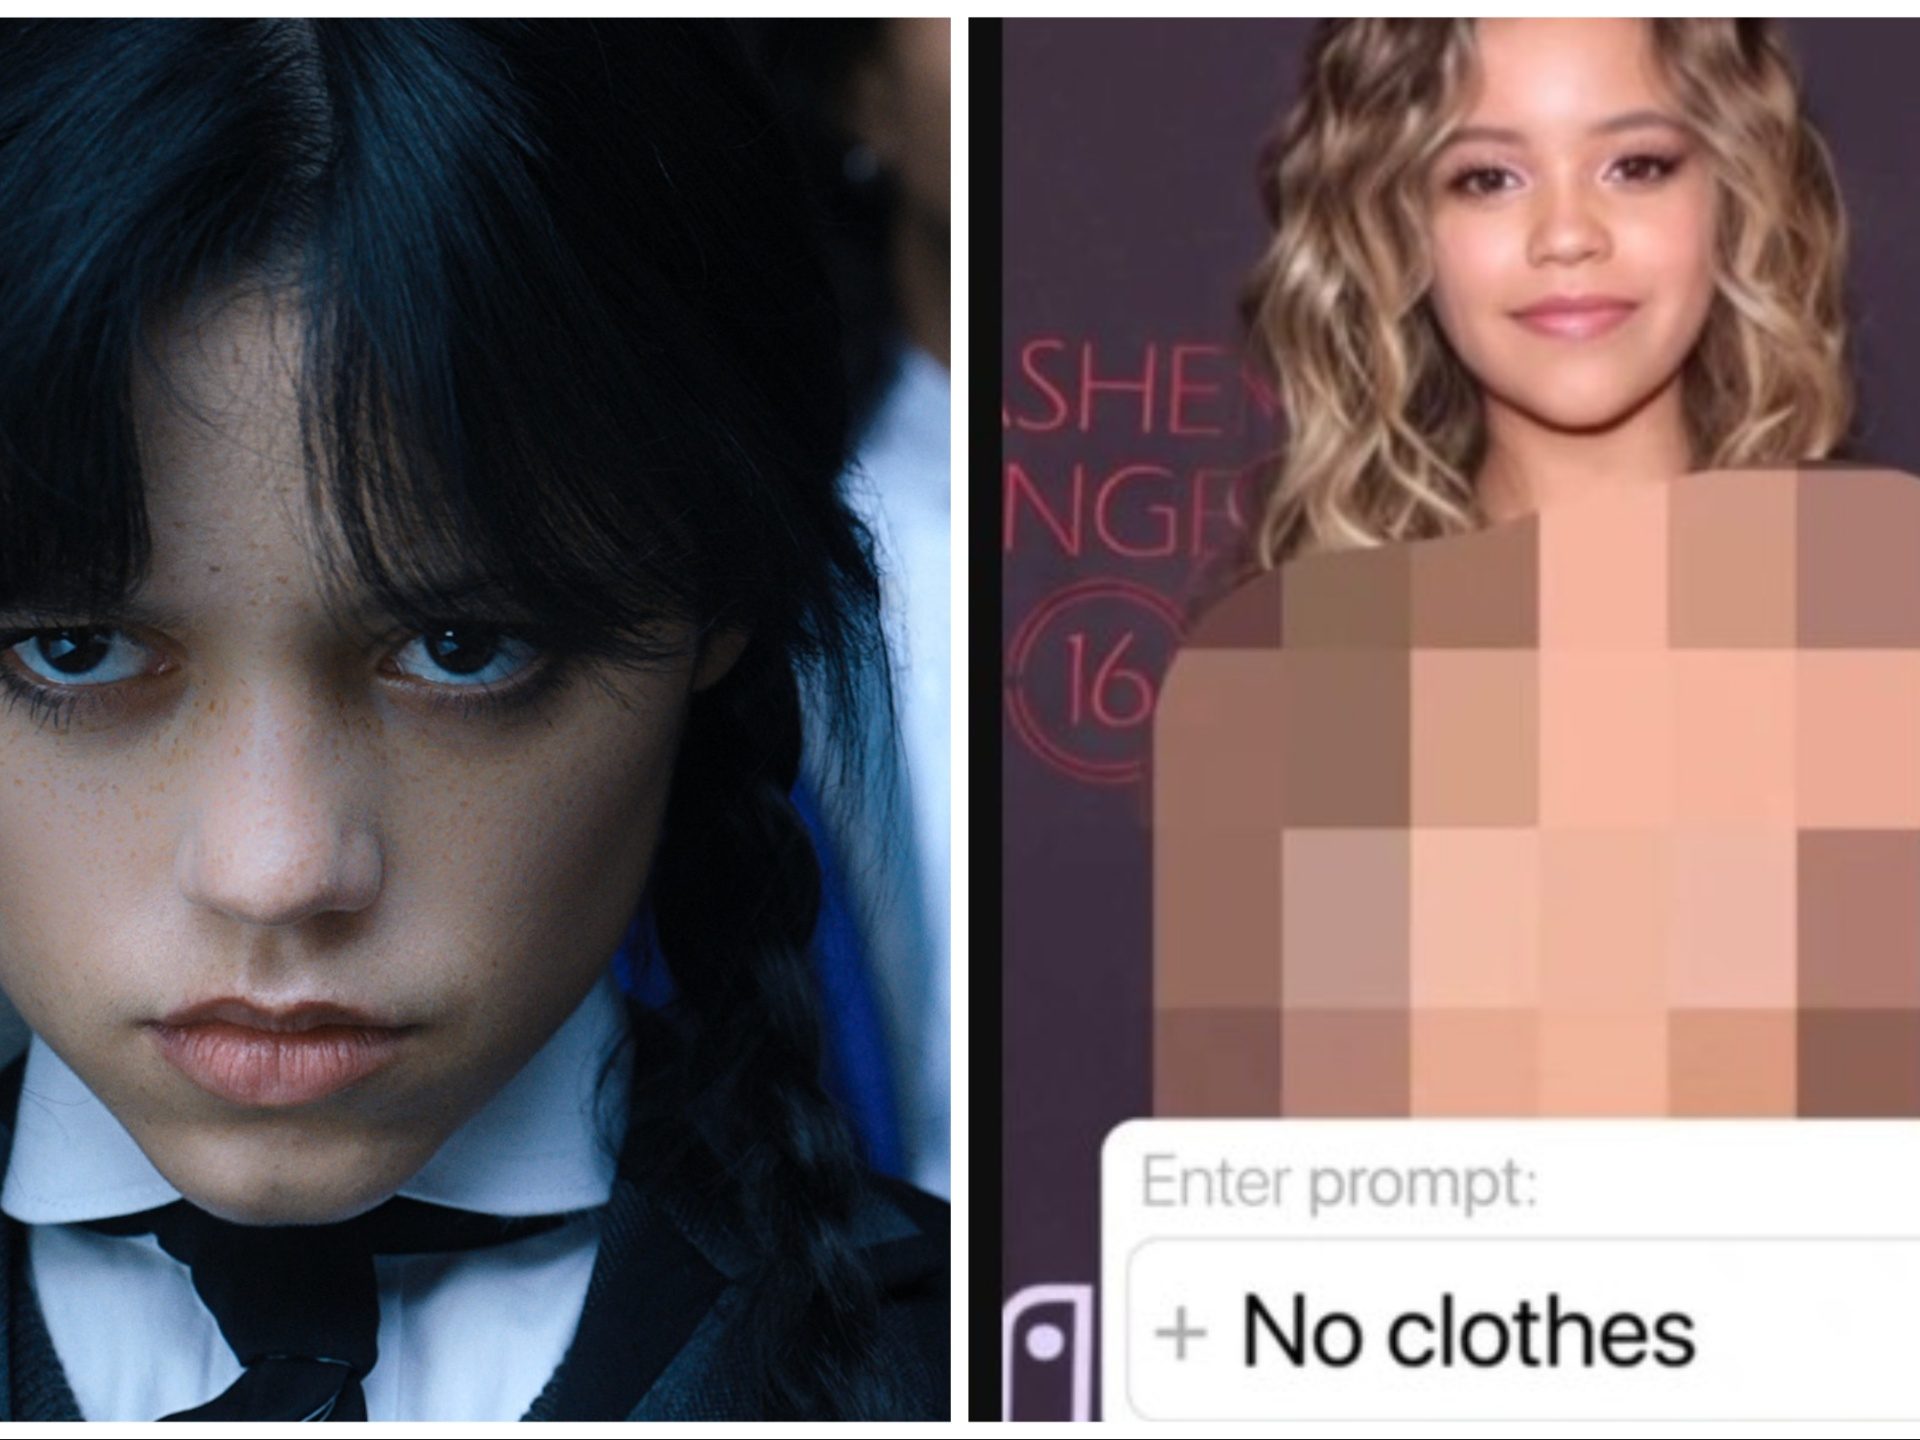 Deepfake di Jenna Ortega usati per pubblicità su Facebook e Instagram: polemica